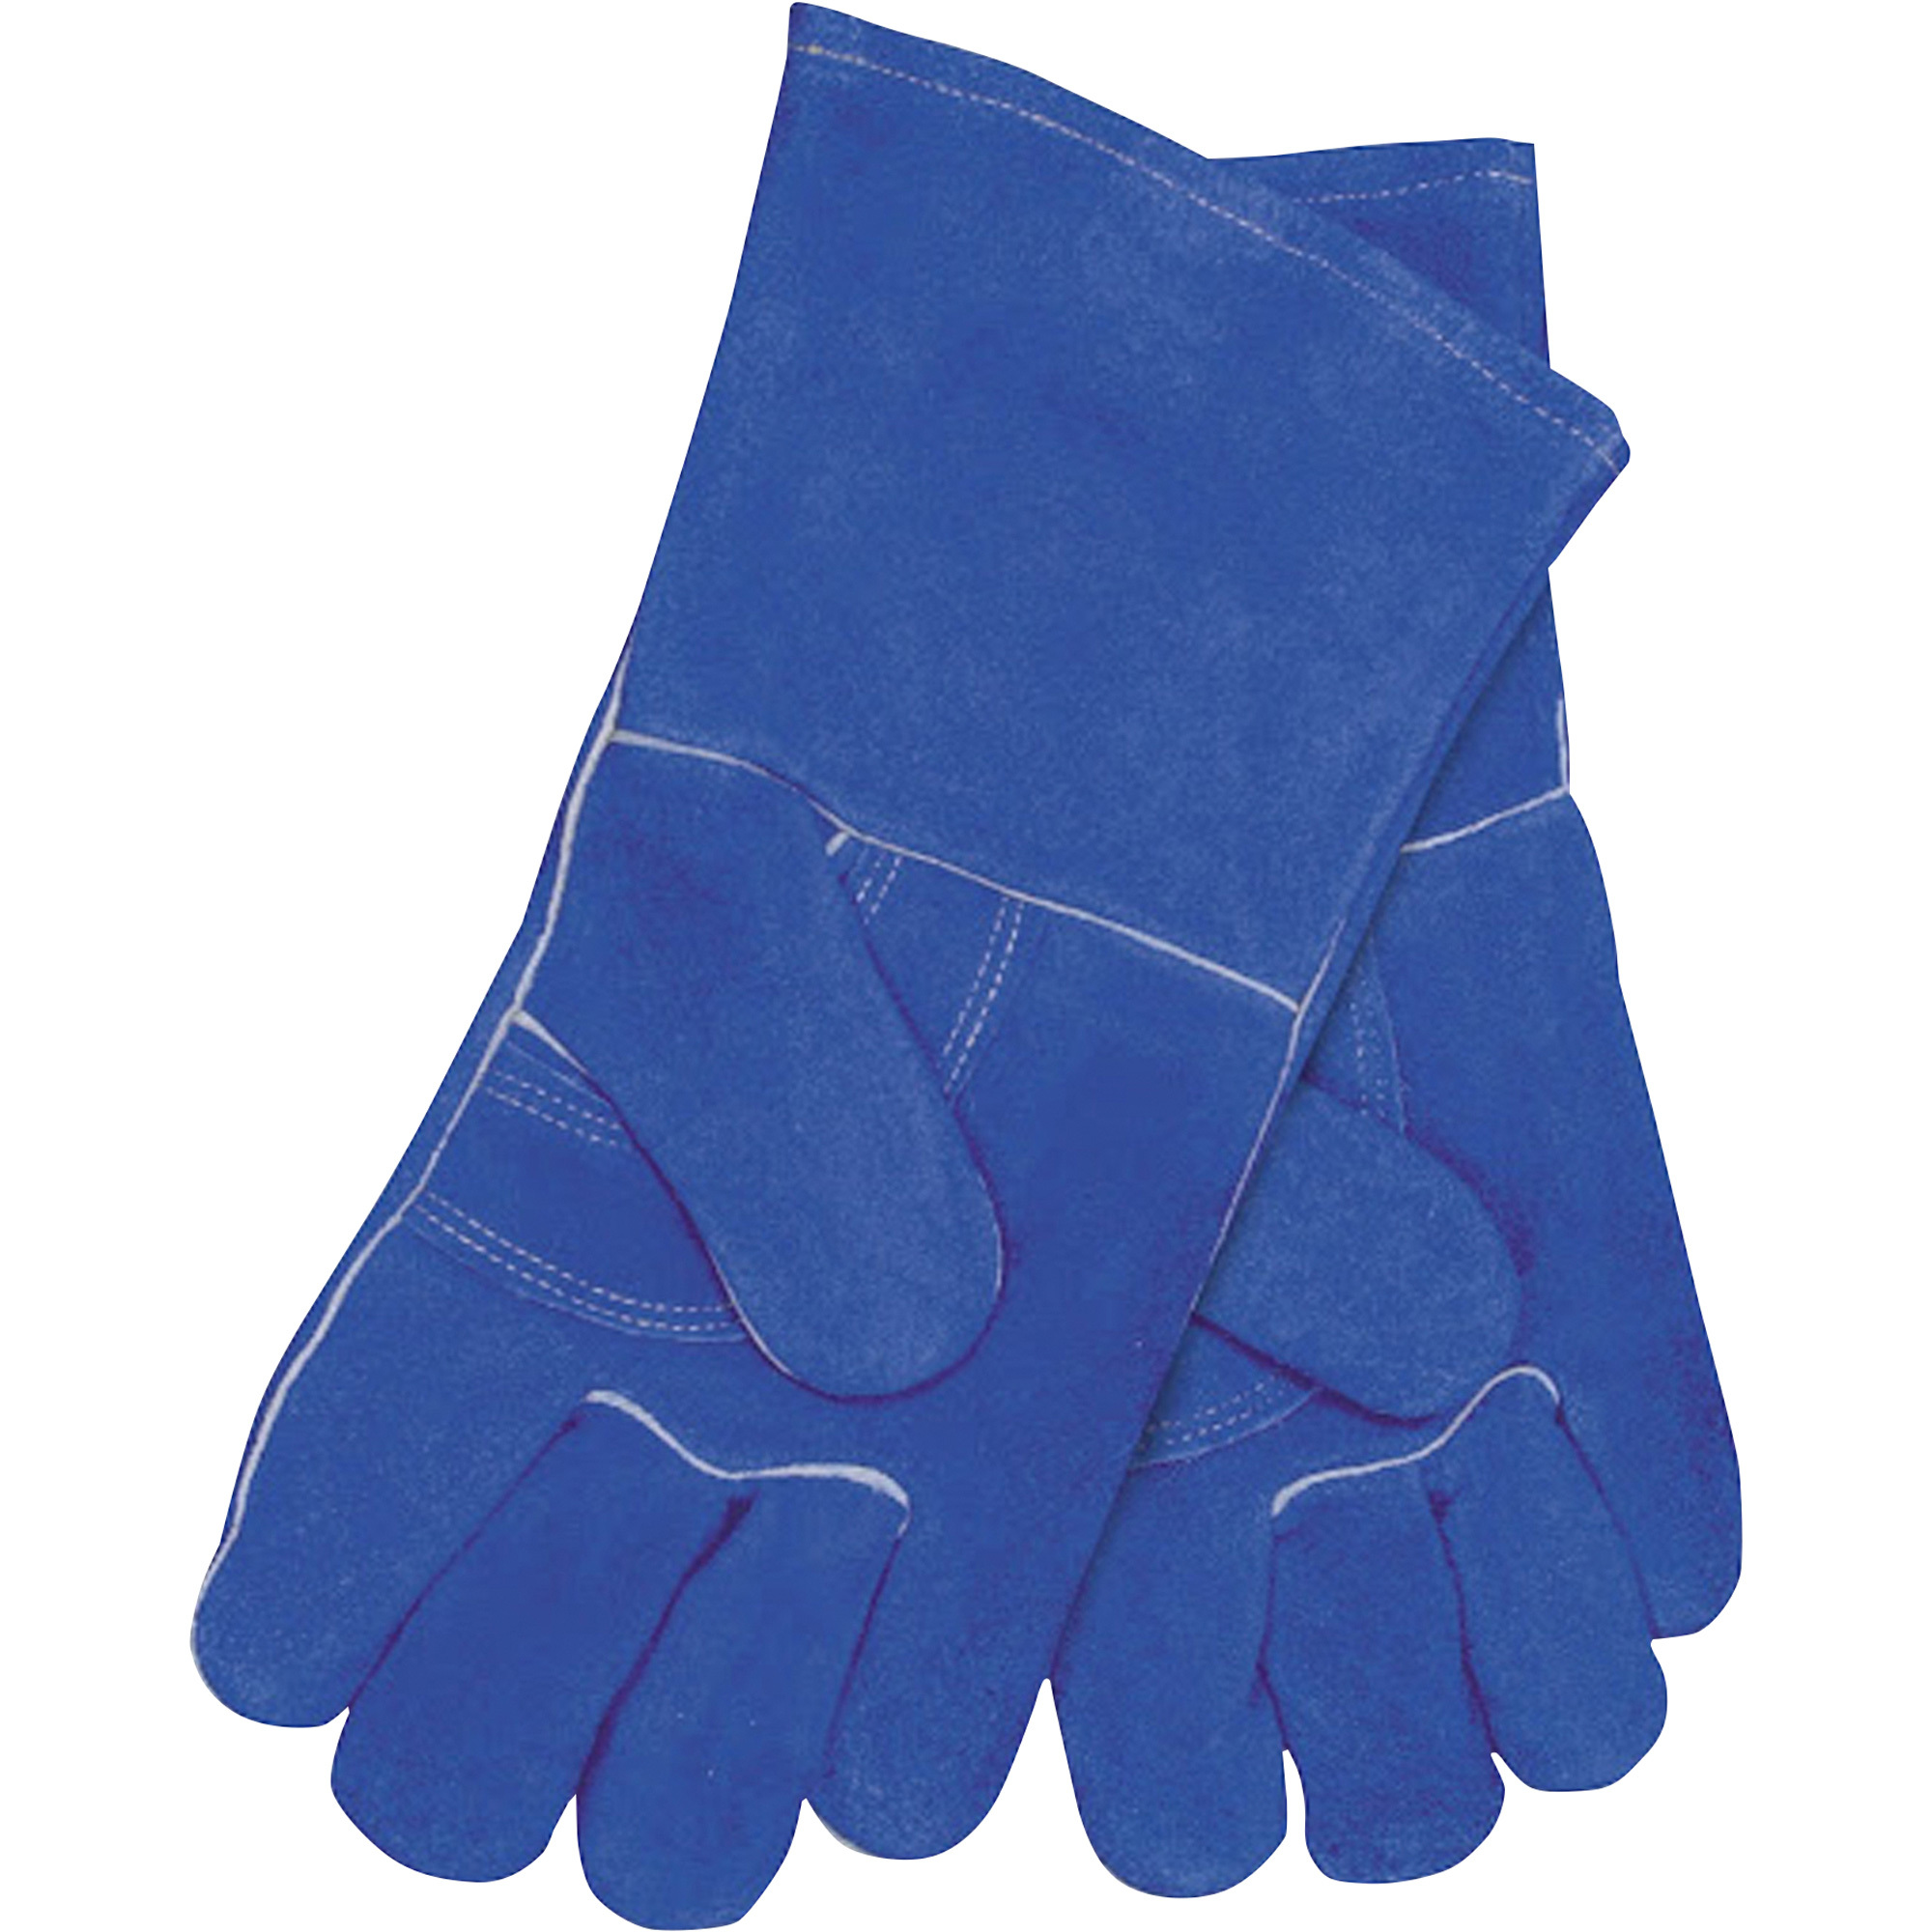 Hobart Deluxe Split Leather Welding Gloves â Blue, X-Large, Pair, Model 770020